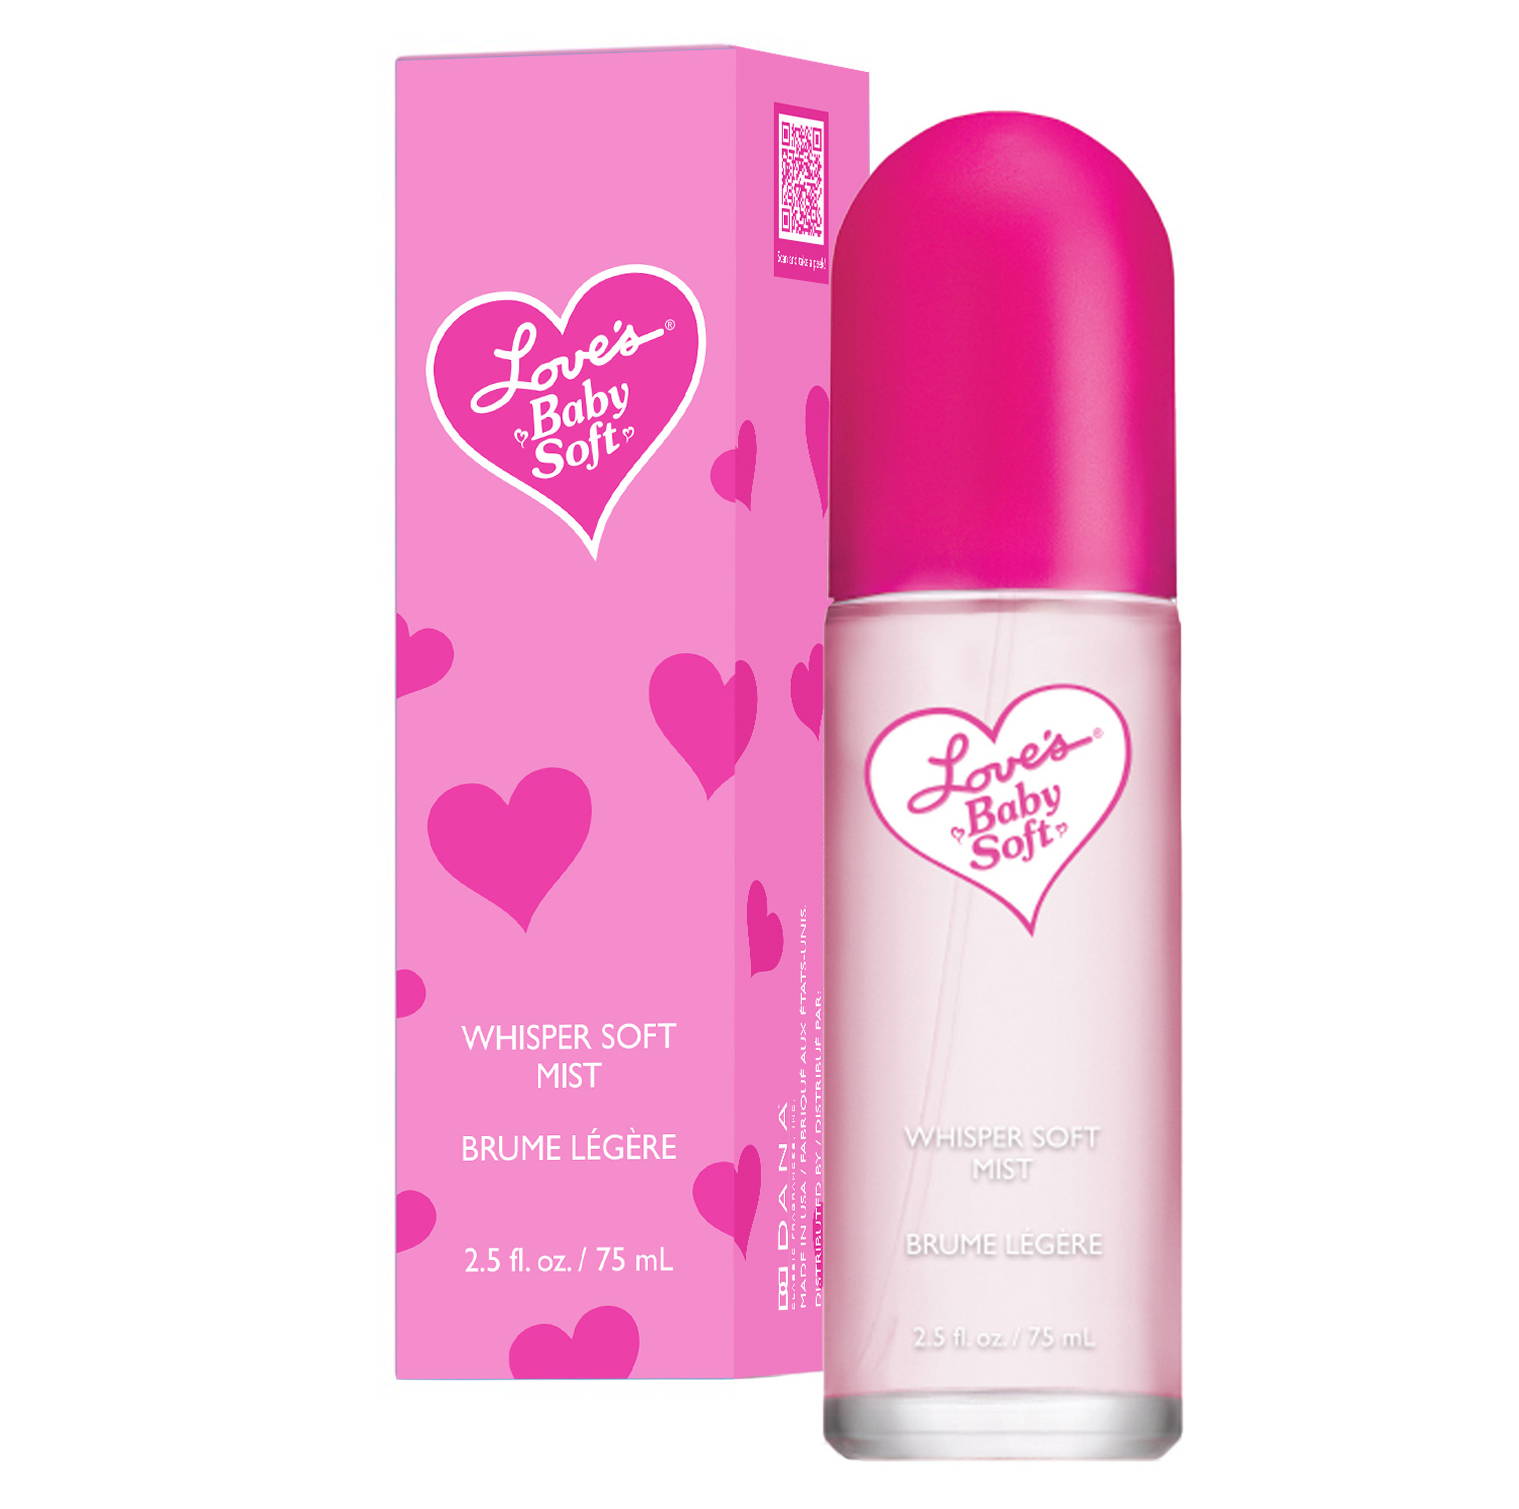 Love's Baby Soft Whisper Mist cologne 2.5 fi oz / 75 ml bottle and packaging box.